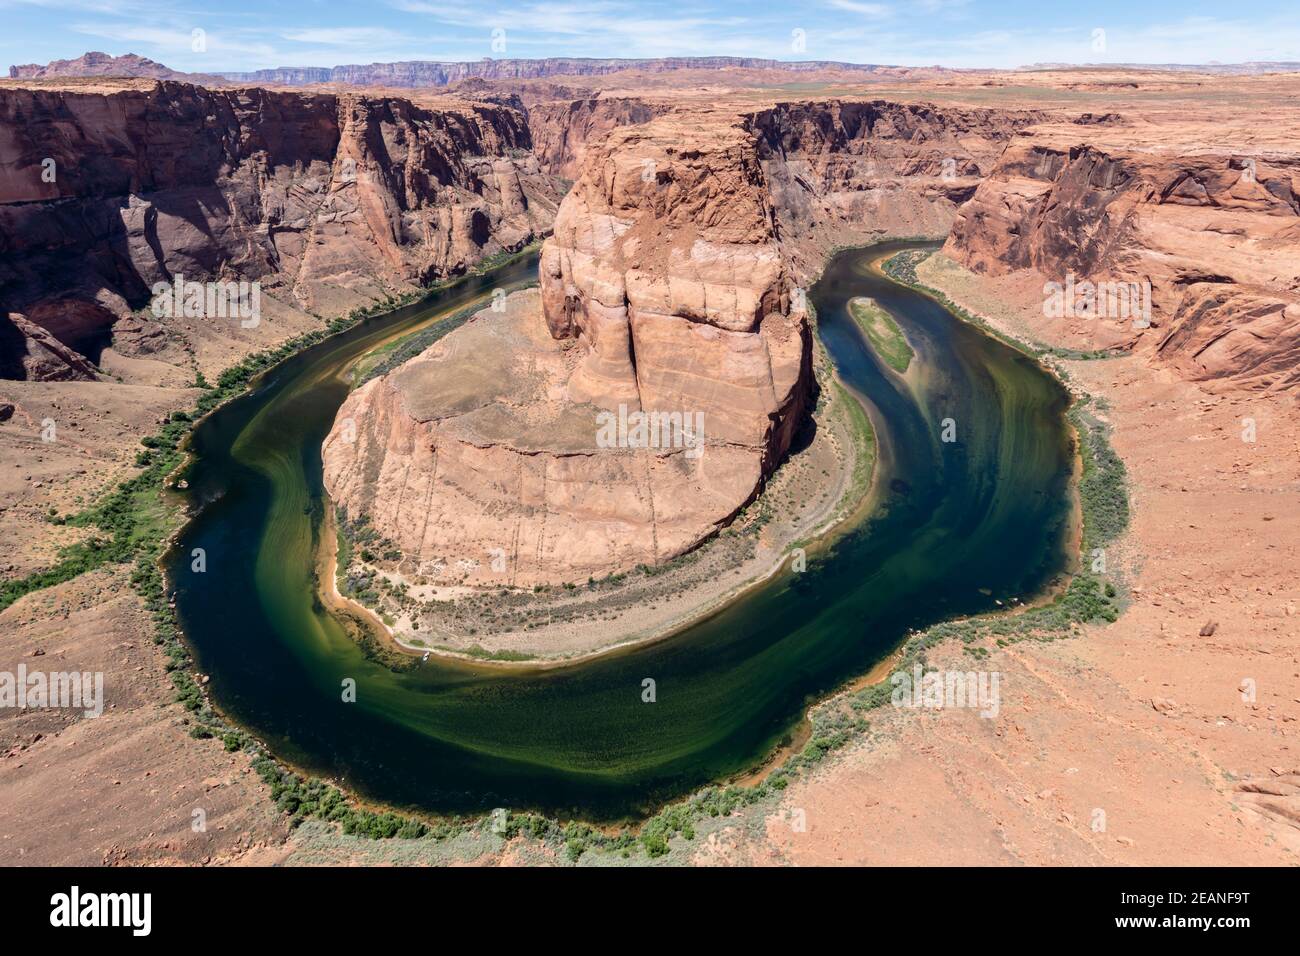 Horseshoe Bend am Colorado River, Glen Canyon National Recreation Area, Arizona, Vereinigte Staaten von Amerika, Nordamerika Stockfoto